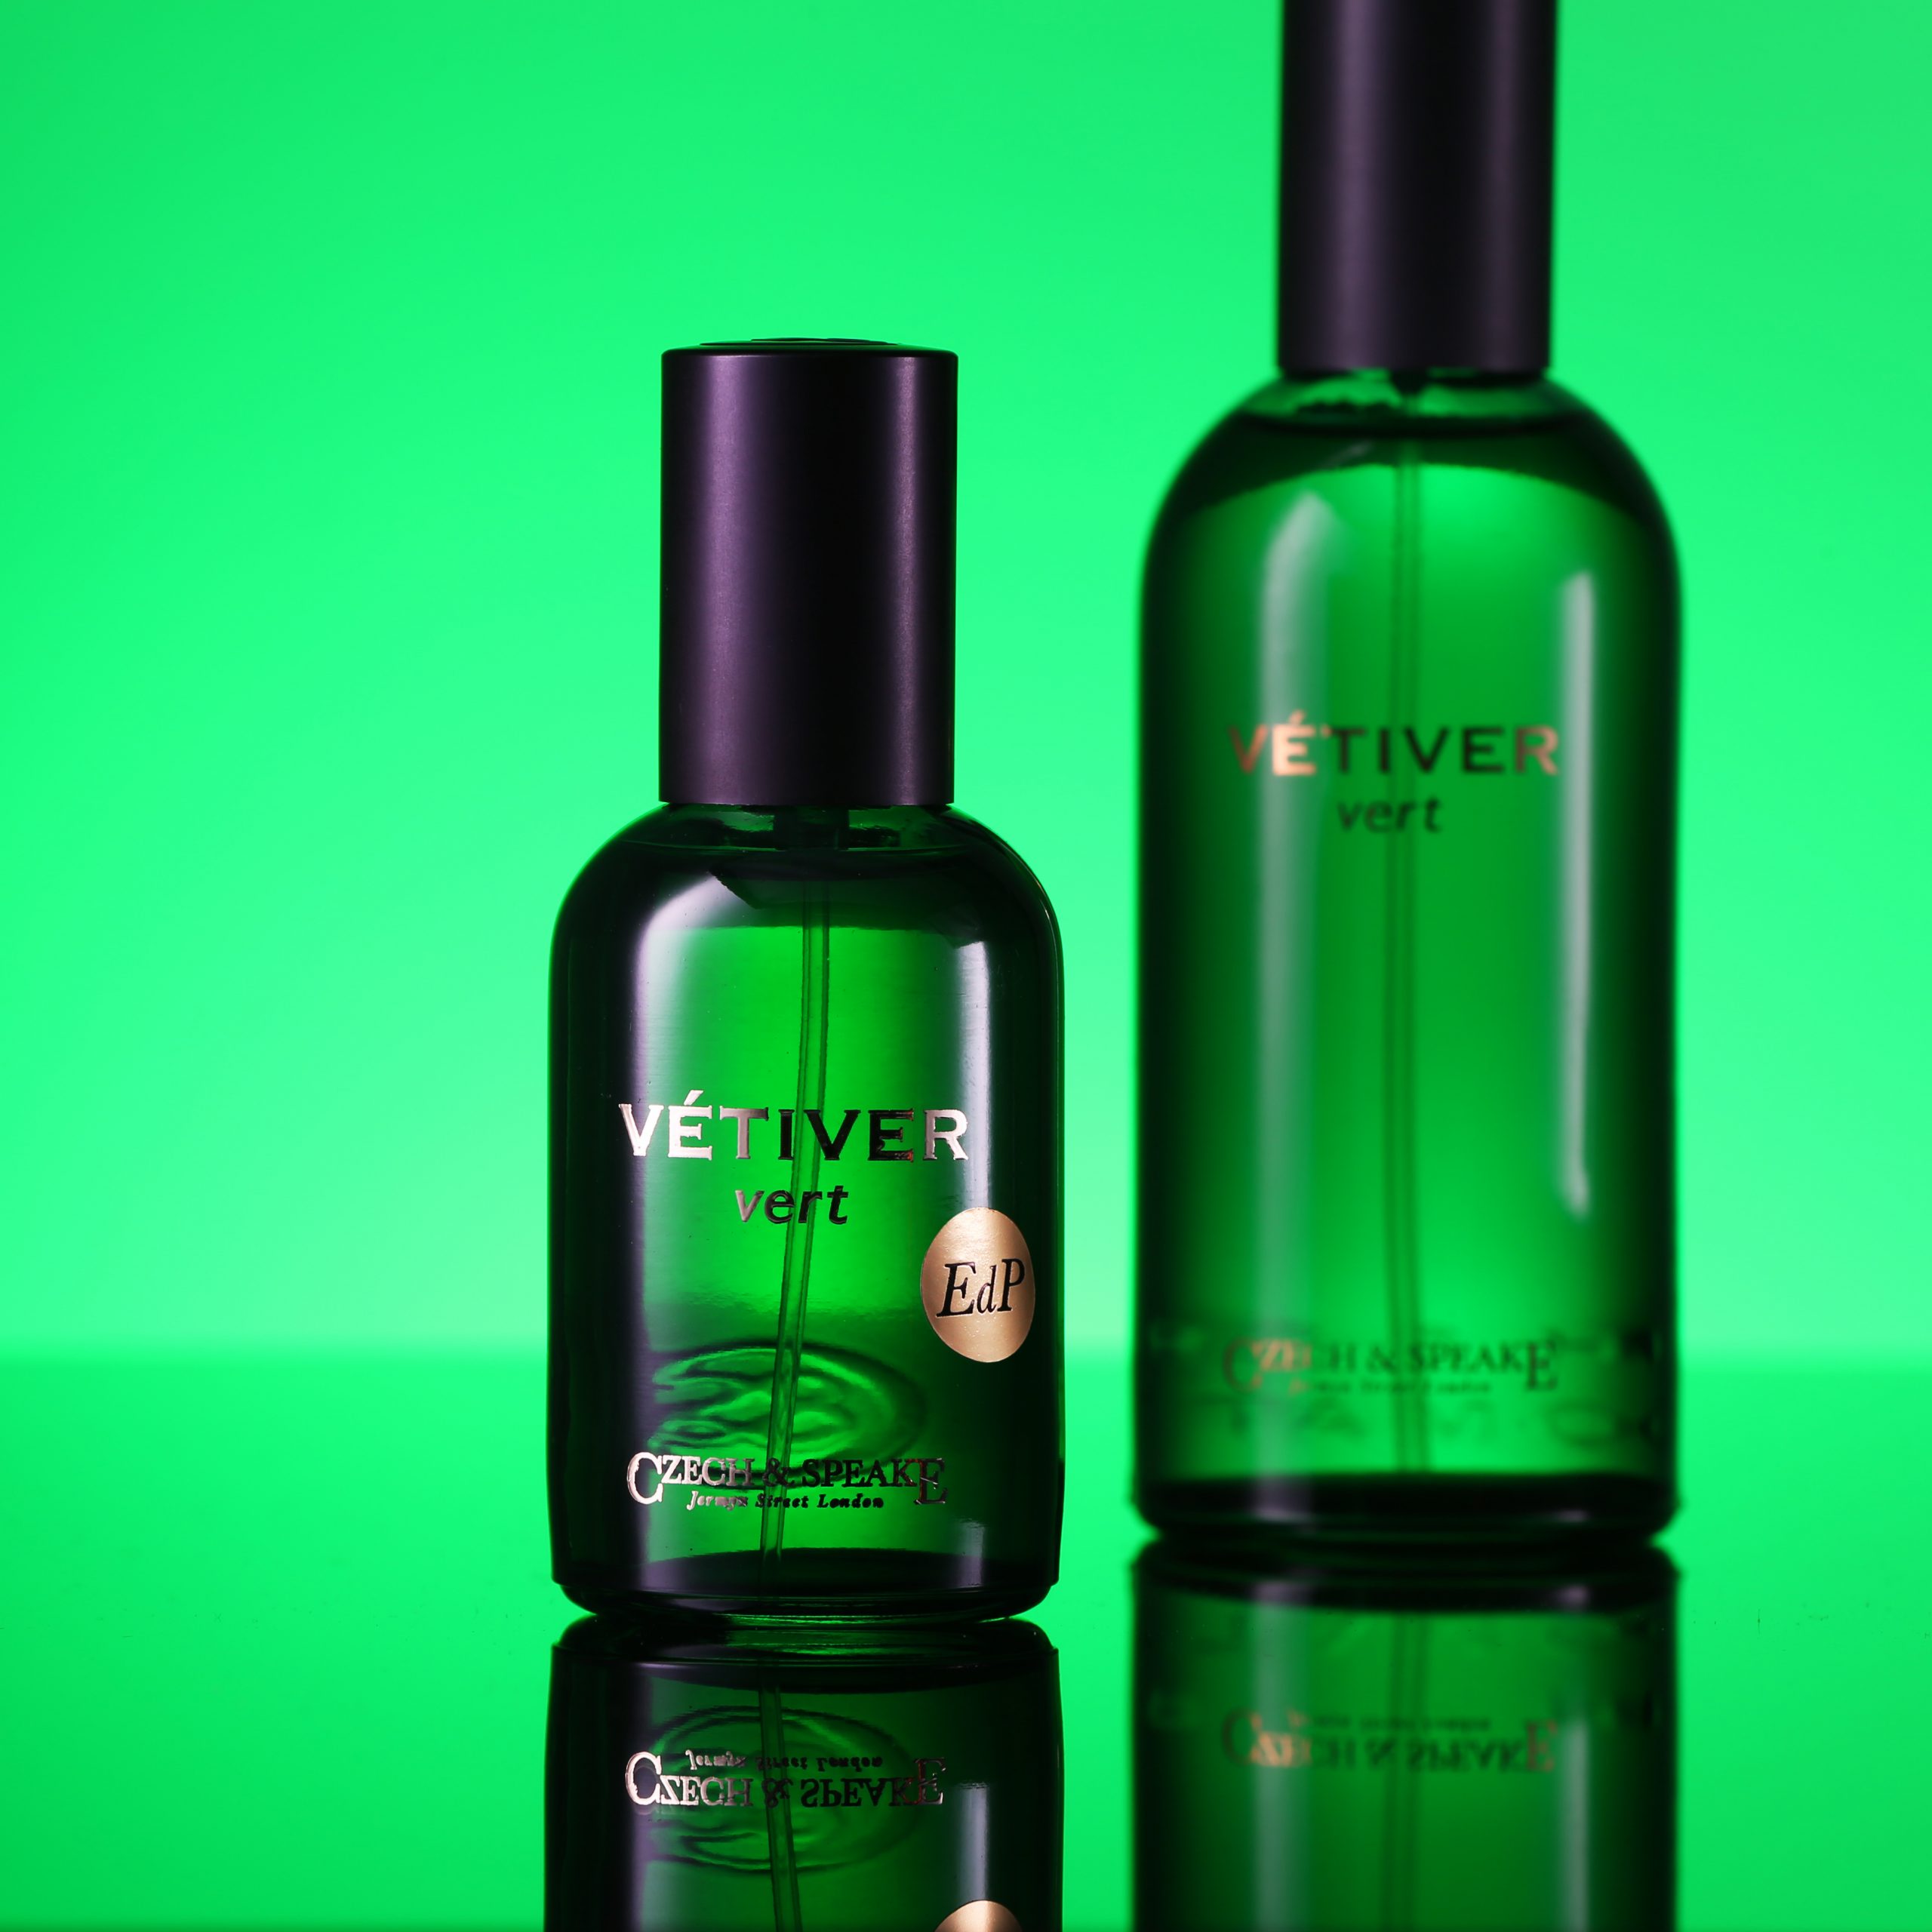 Vétiver Vert Eau de Parfum Spray 50ml and Vétiver Vert Cologne Spray 100ml on green